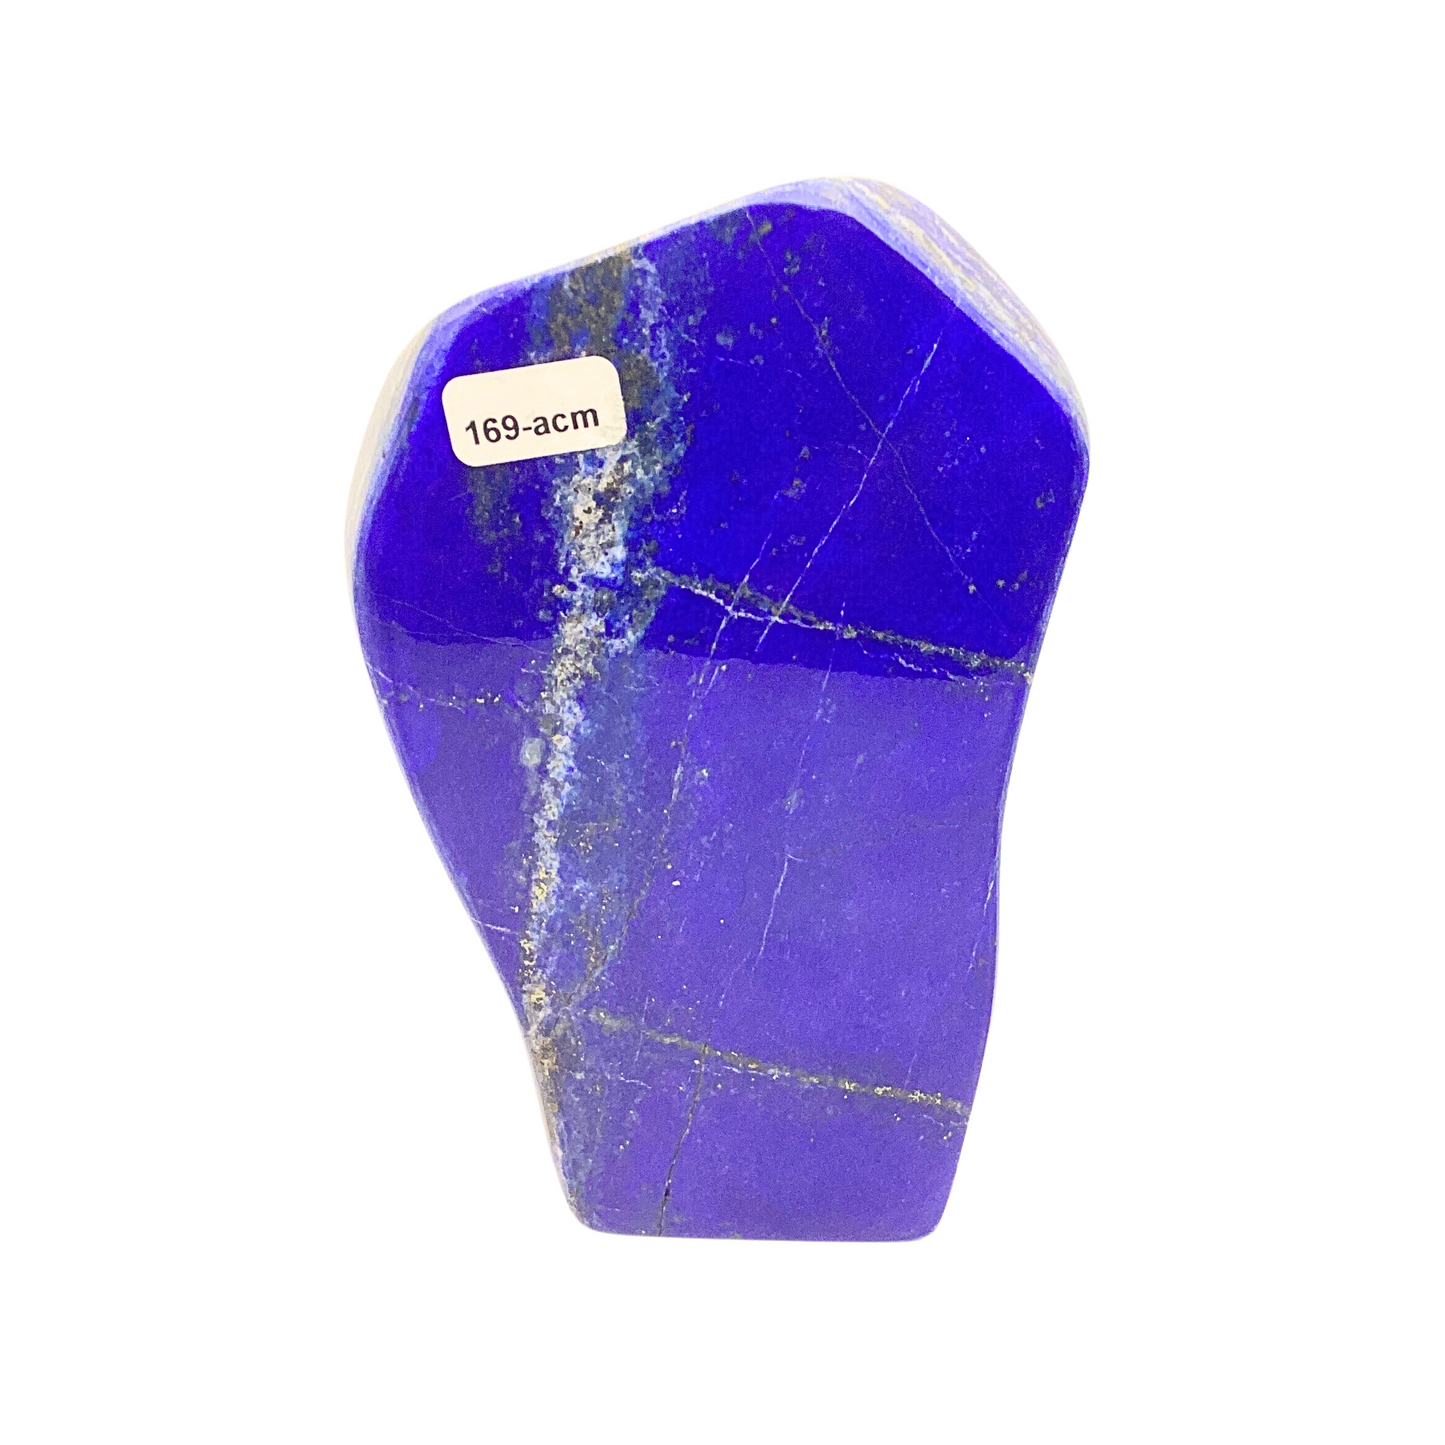 Lapis lazuli 169-acm